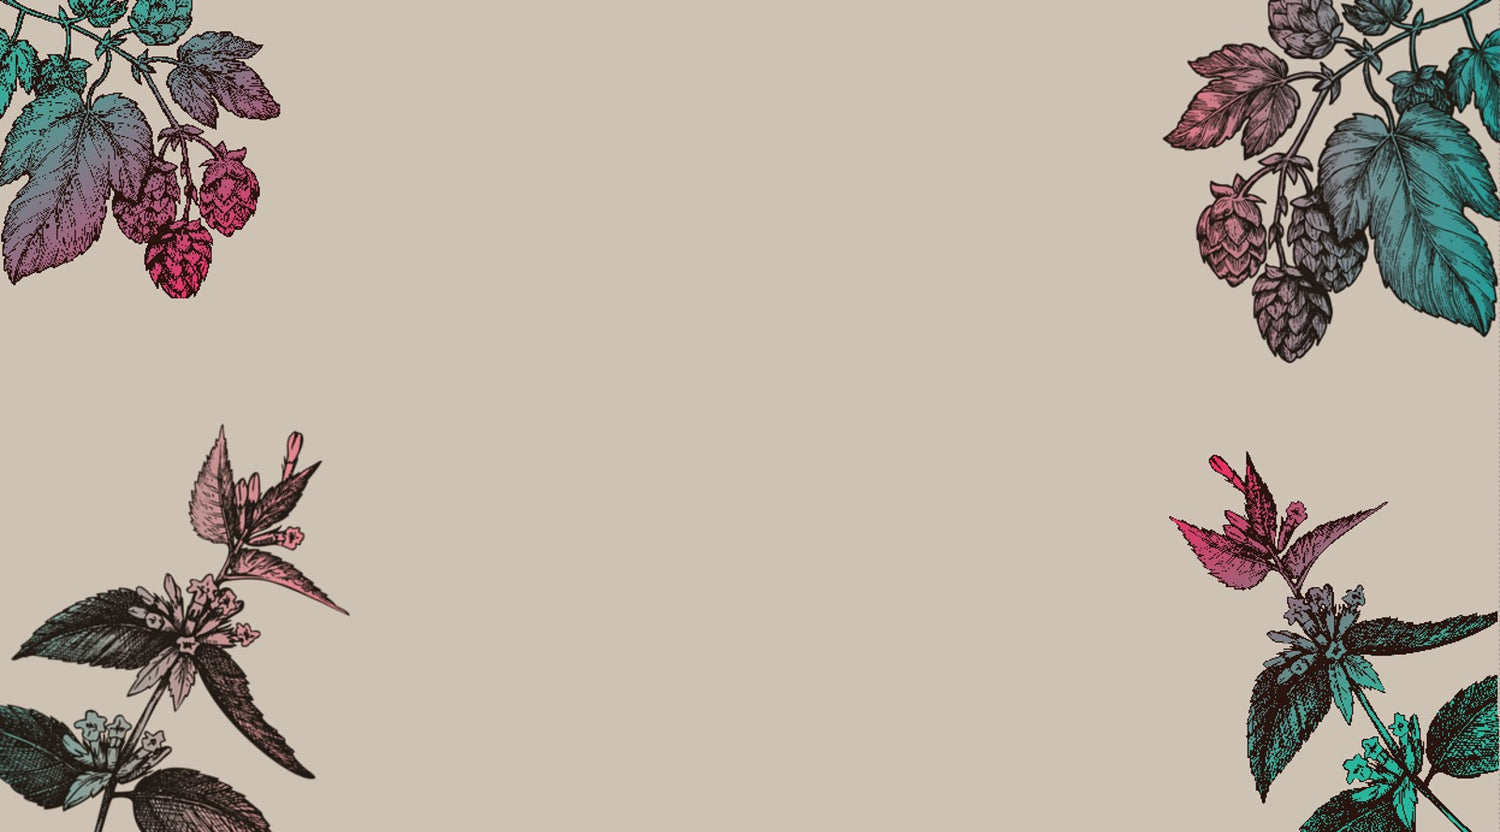 Image of sketched lemonbalm and hops on a beige background